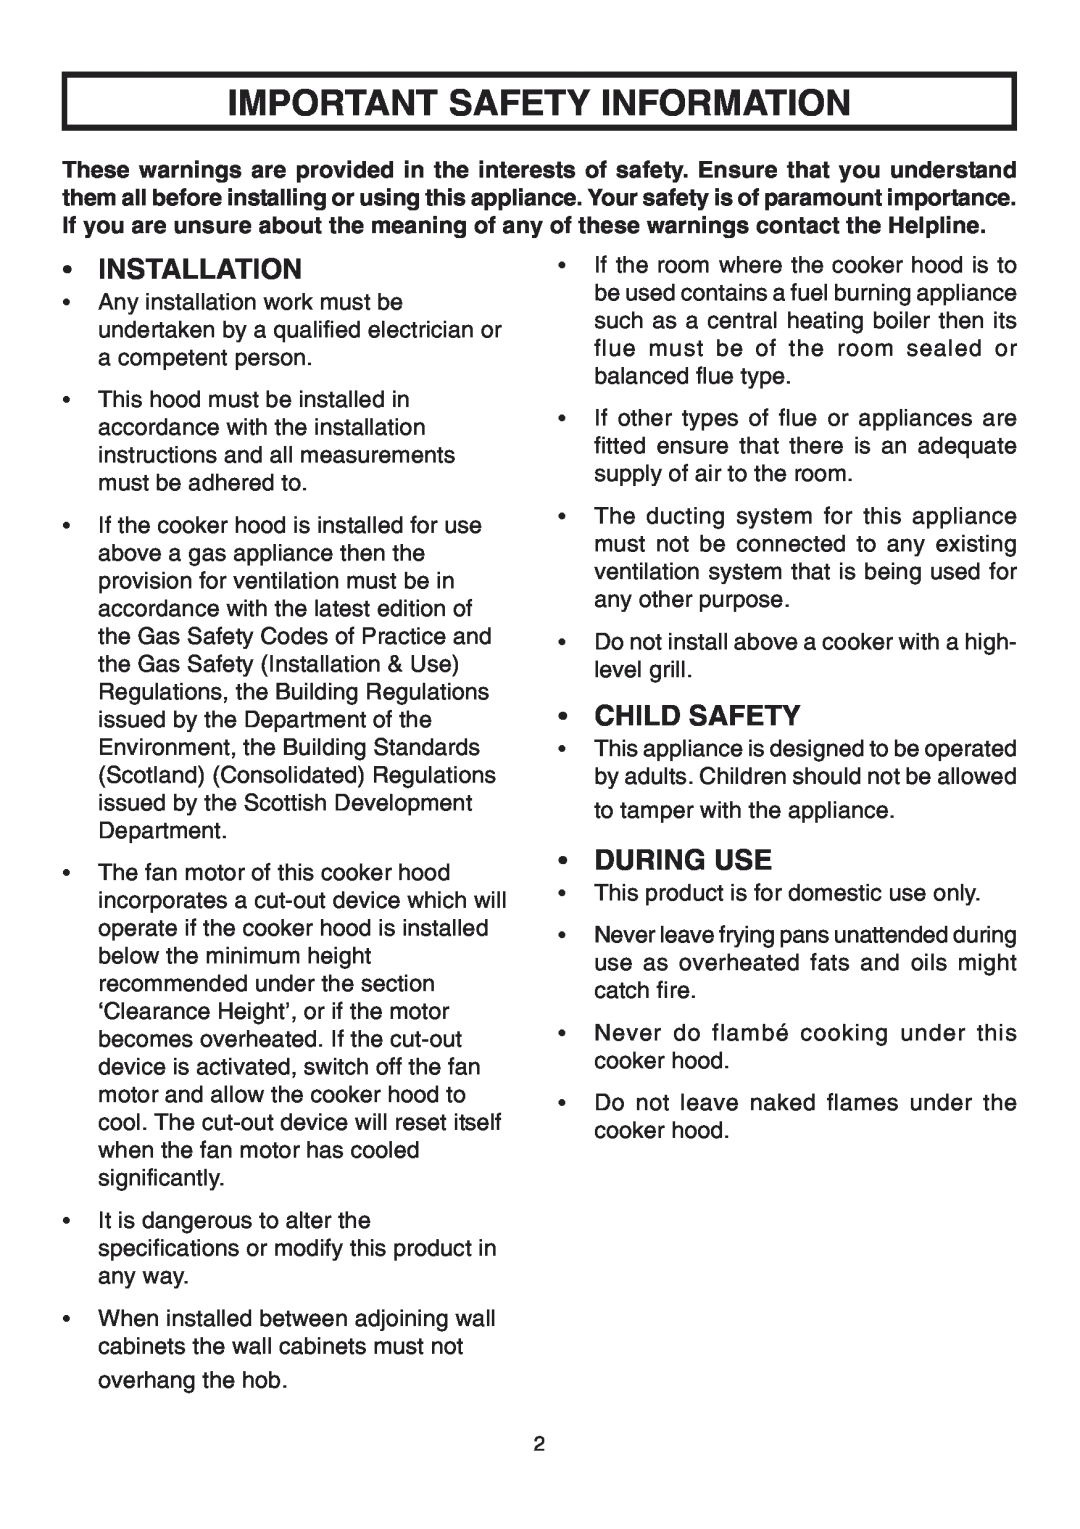 Rangemaster ELTSHDC110SG installation instructions Important Safety Information, Installation, Child Safety, During Use 